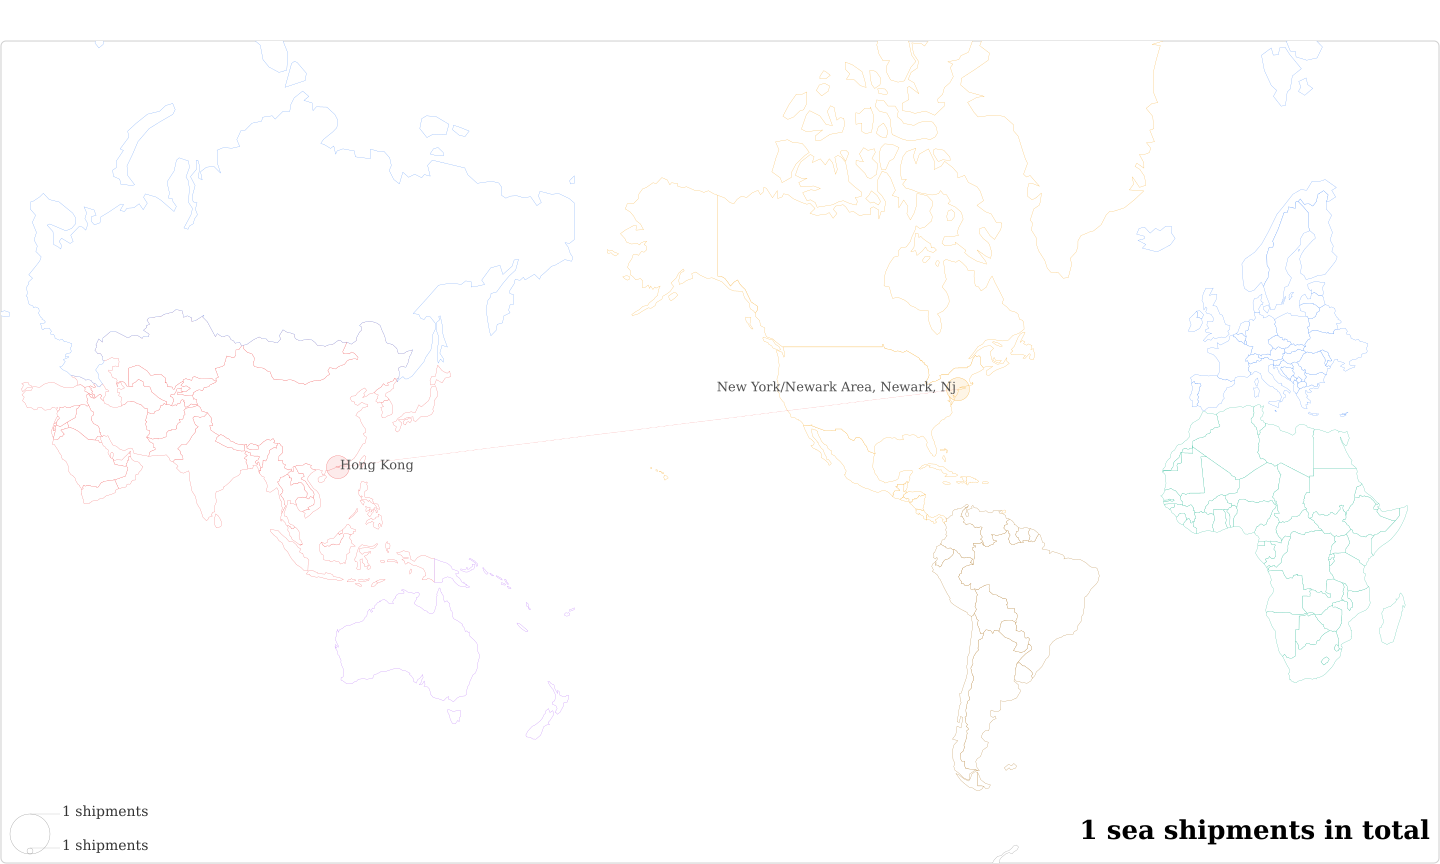 Zuma Japanese Restaurant New York's Imports Per Country Map